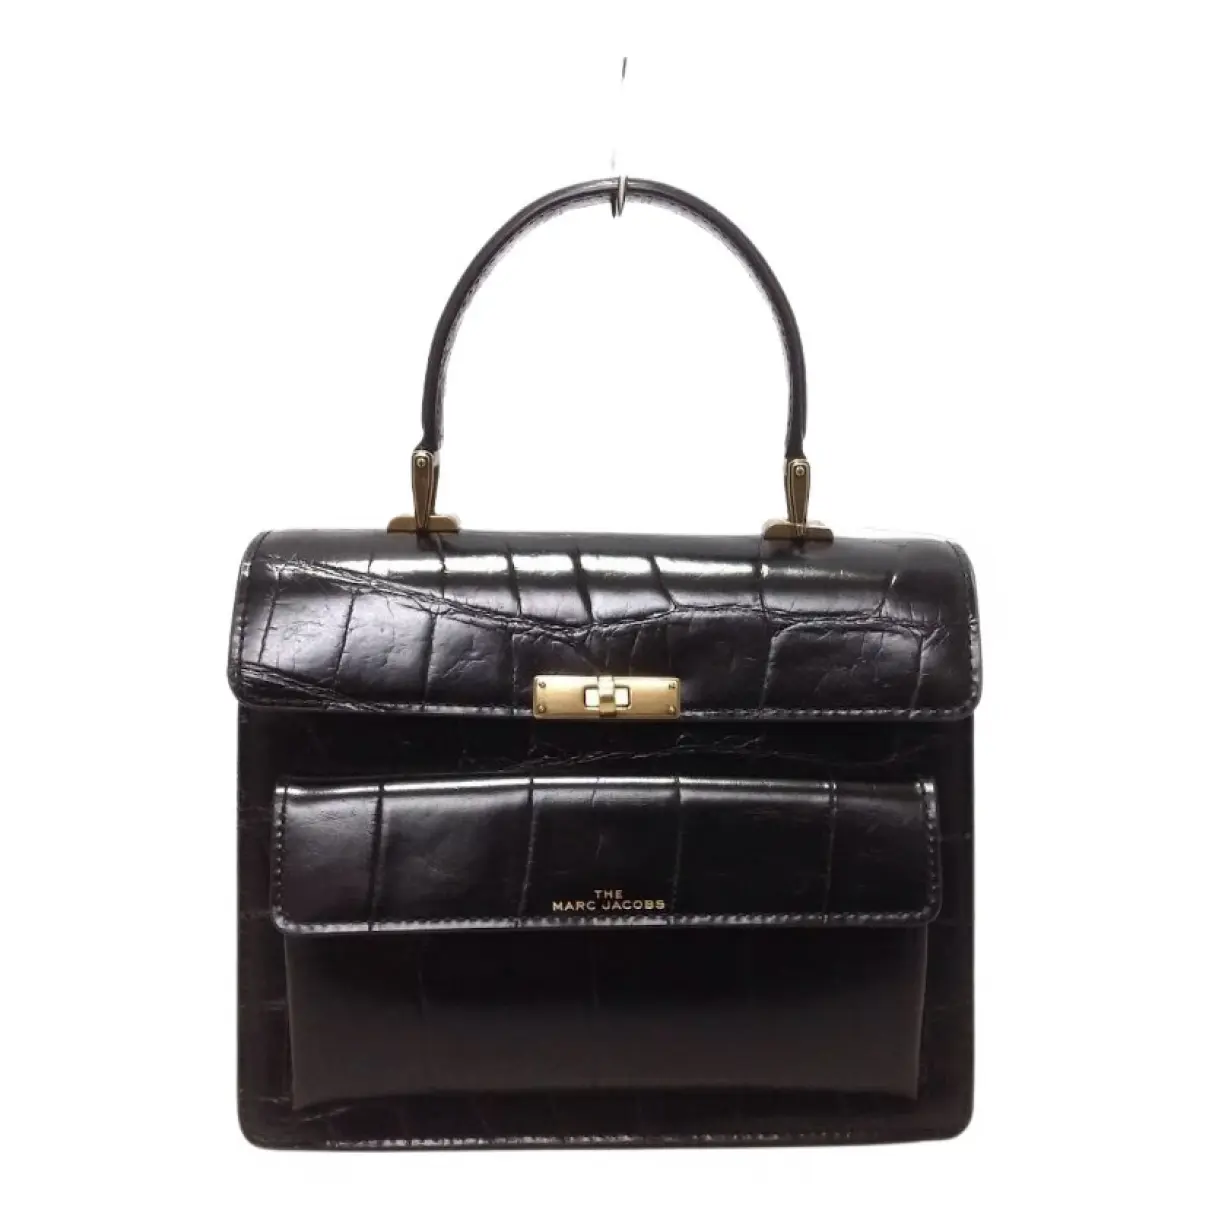 Downtown leather handbag Marc Jacobs